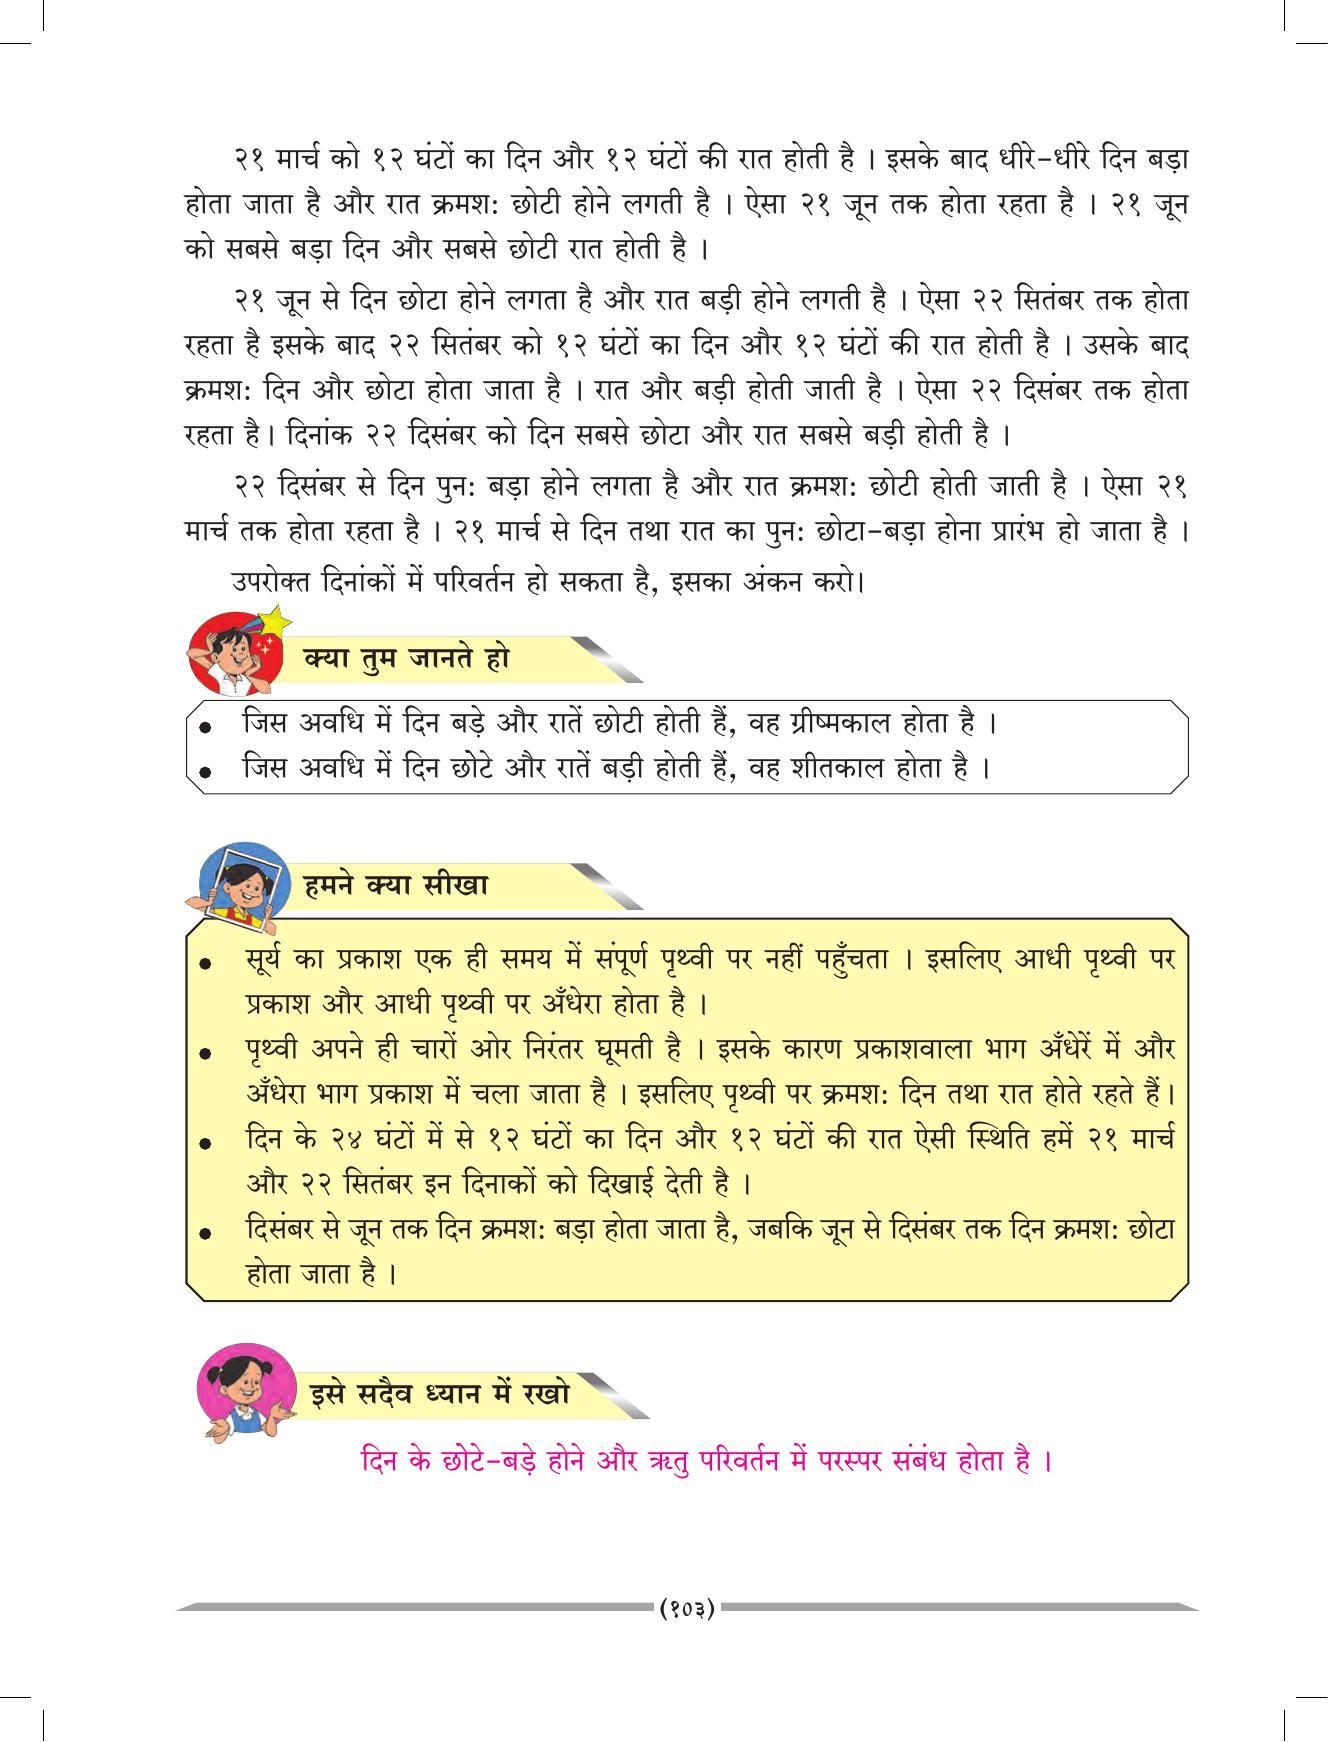 Maharashtra Board Class 4 EVS 1 (Hindi Medium) Textbook - Page 113